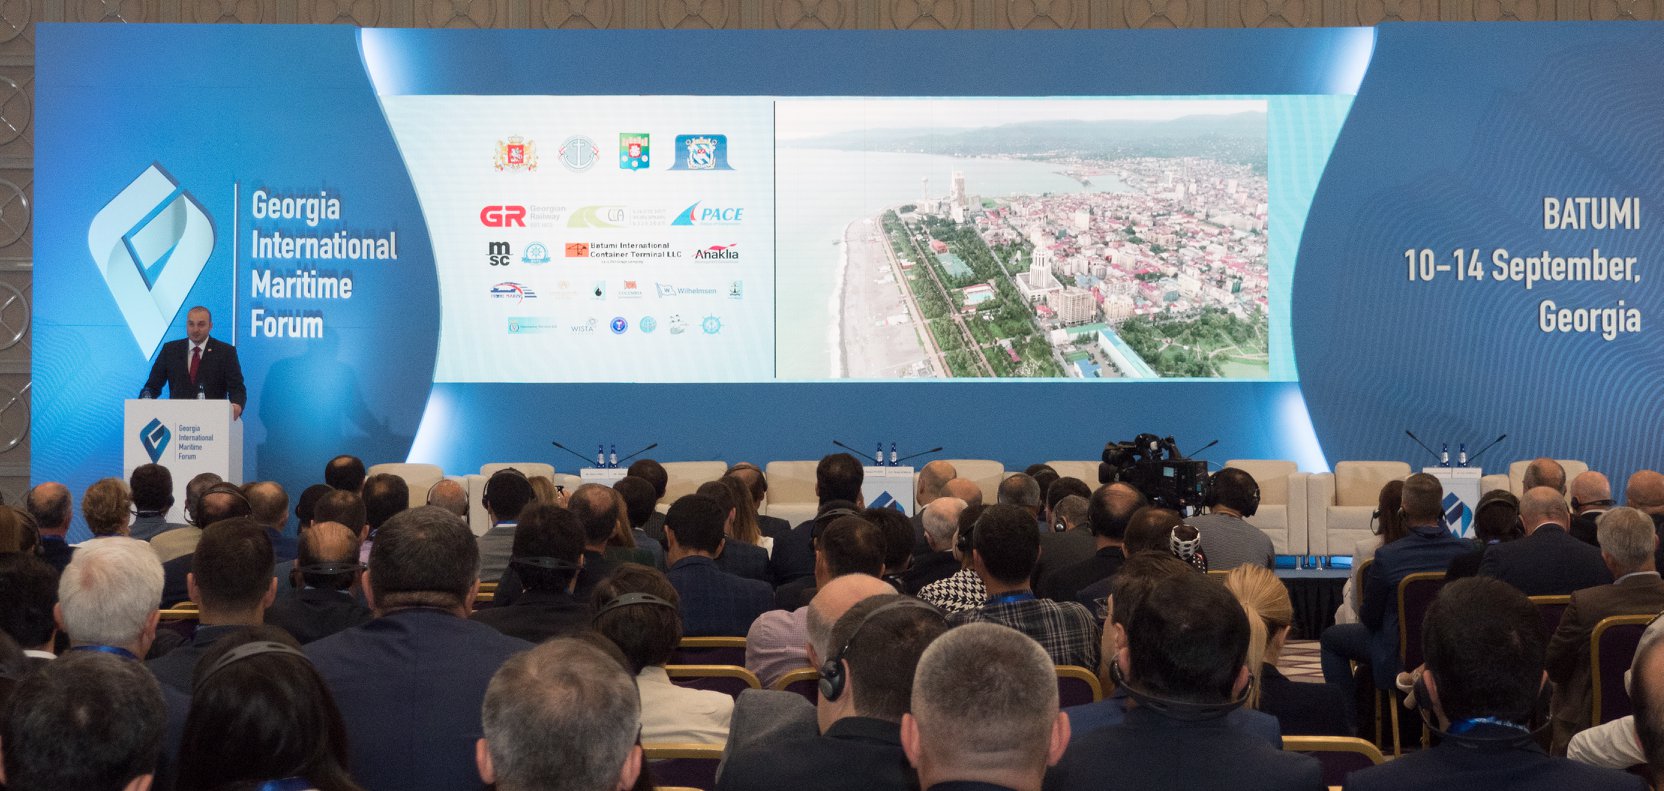 Georgia International Maritime Forum 2018